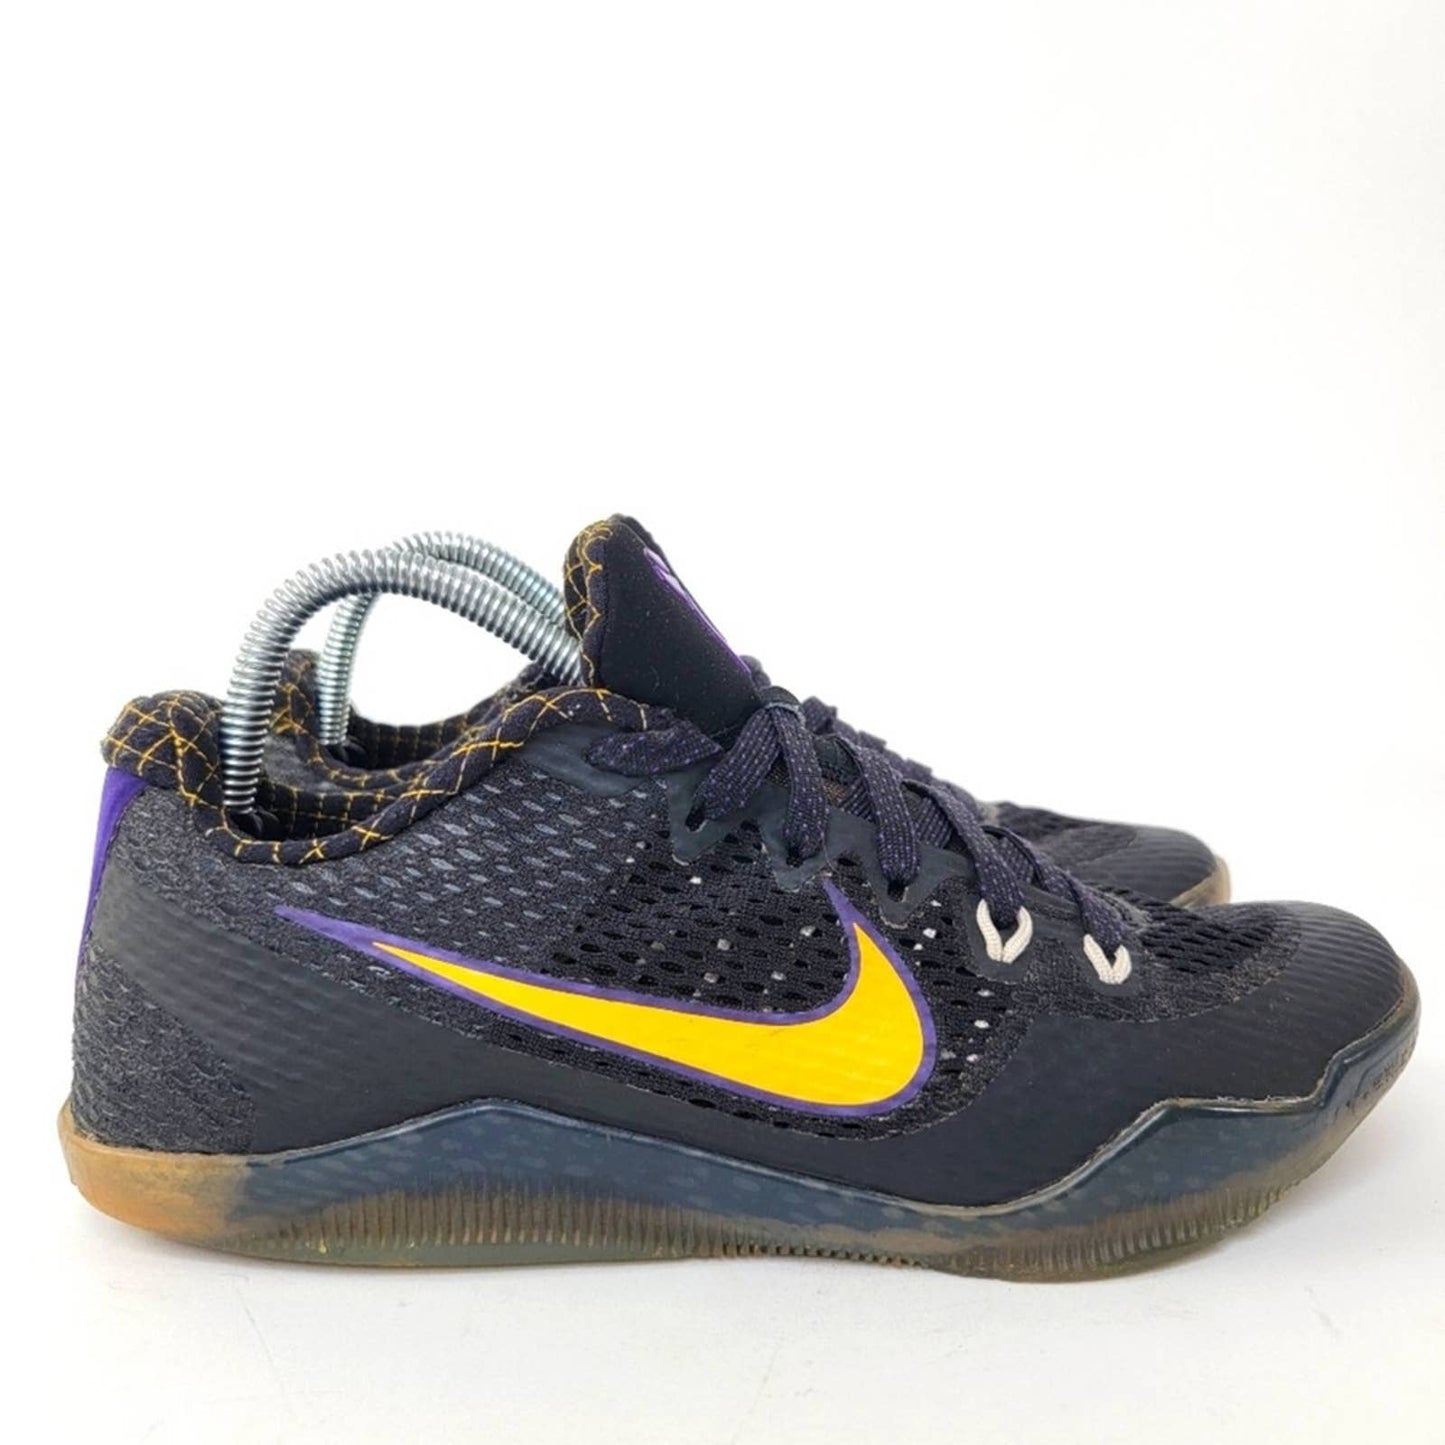 Rare Nike Kobe 11 Carpe Diem Sneakers - 8.5